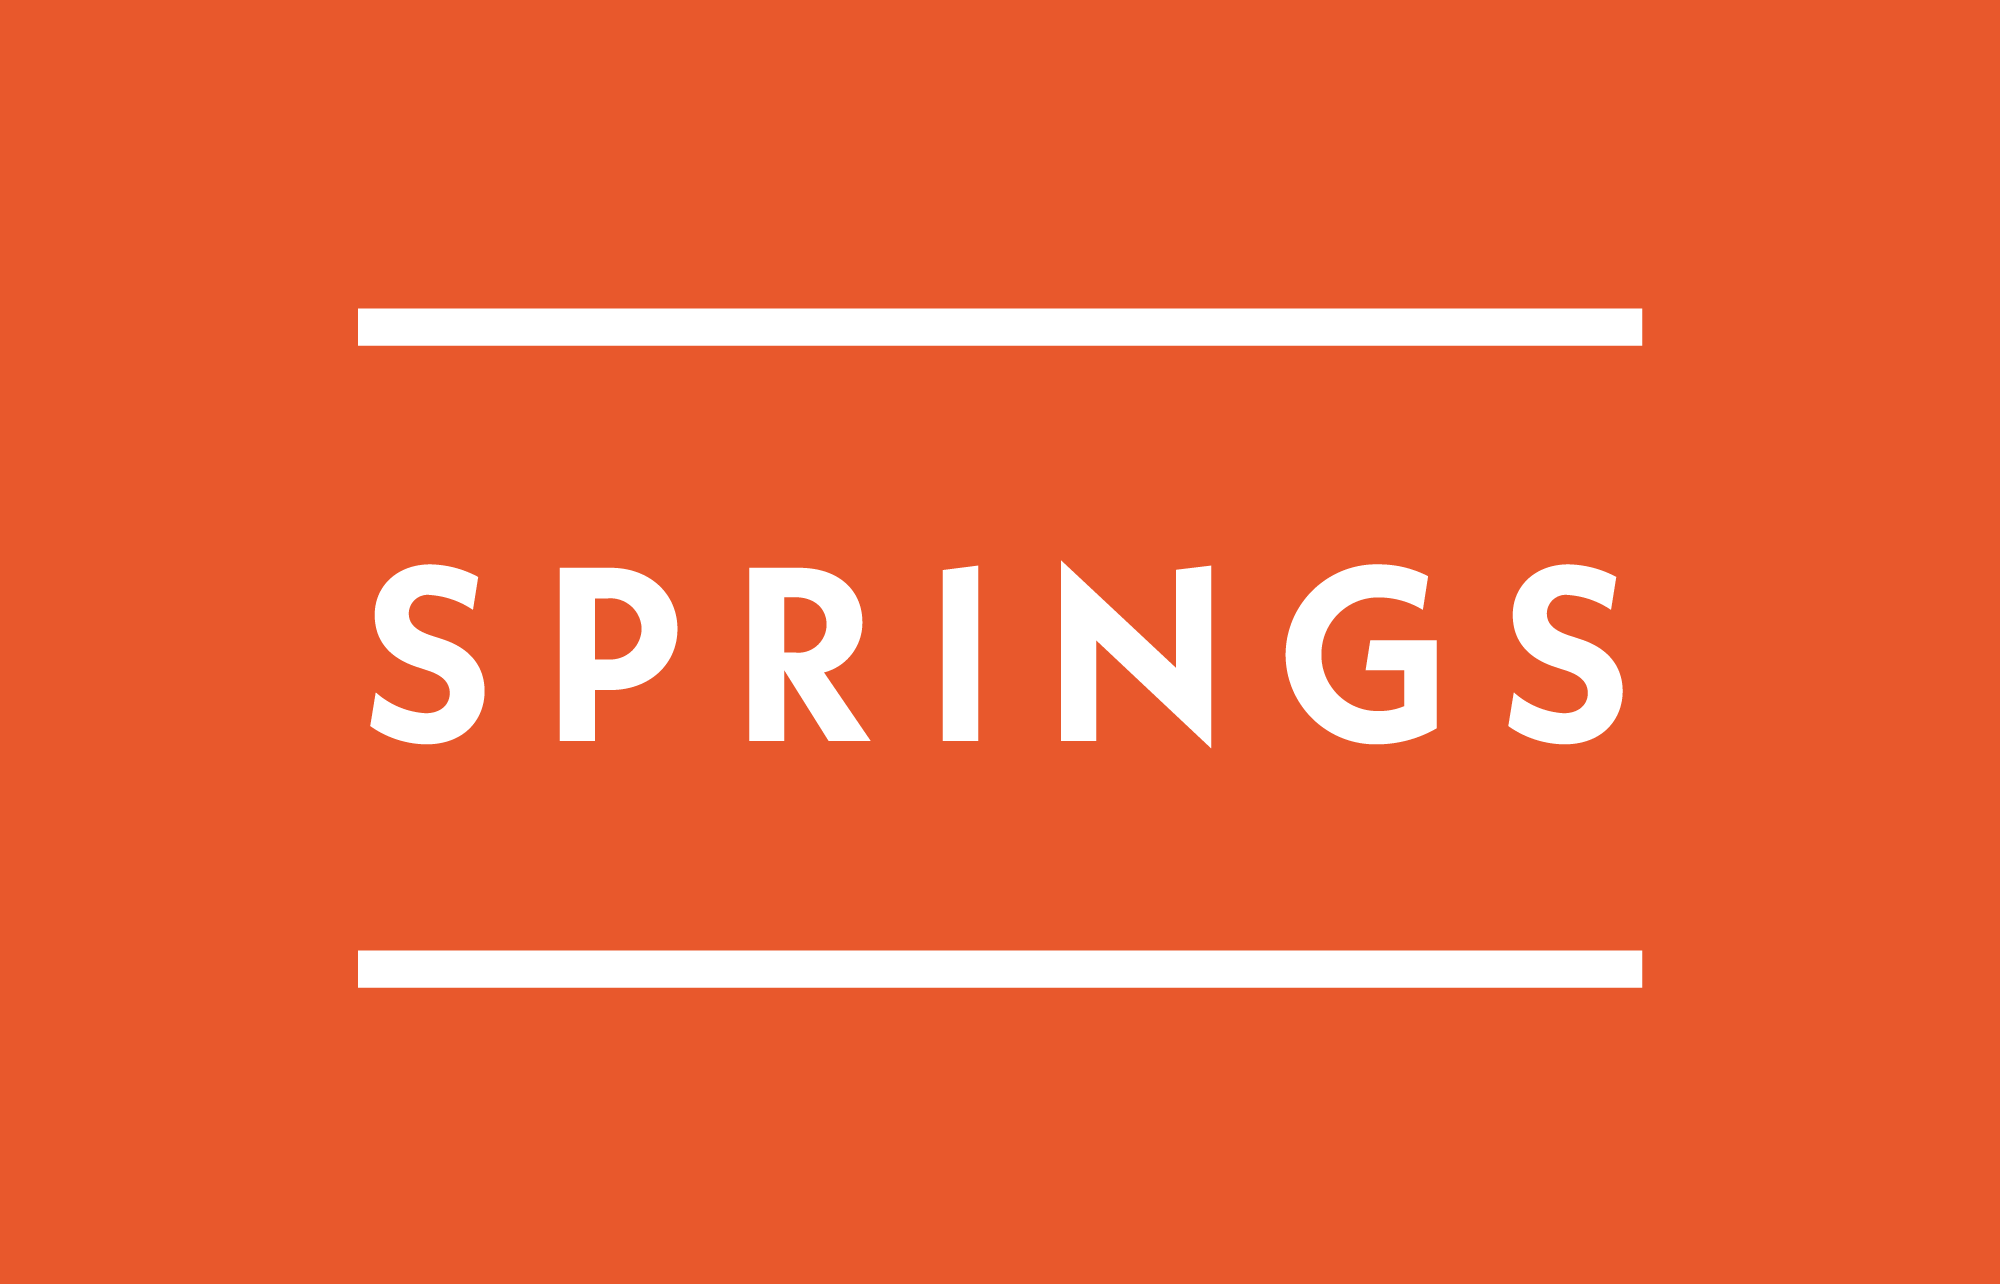 Springs: The Rachel Carson Center Review